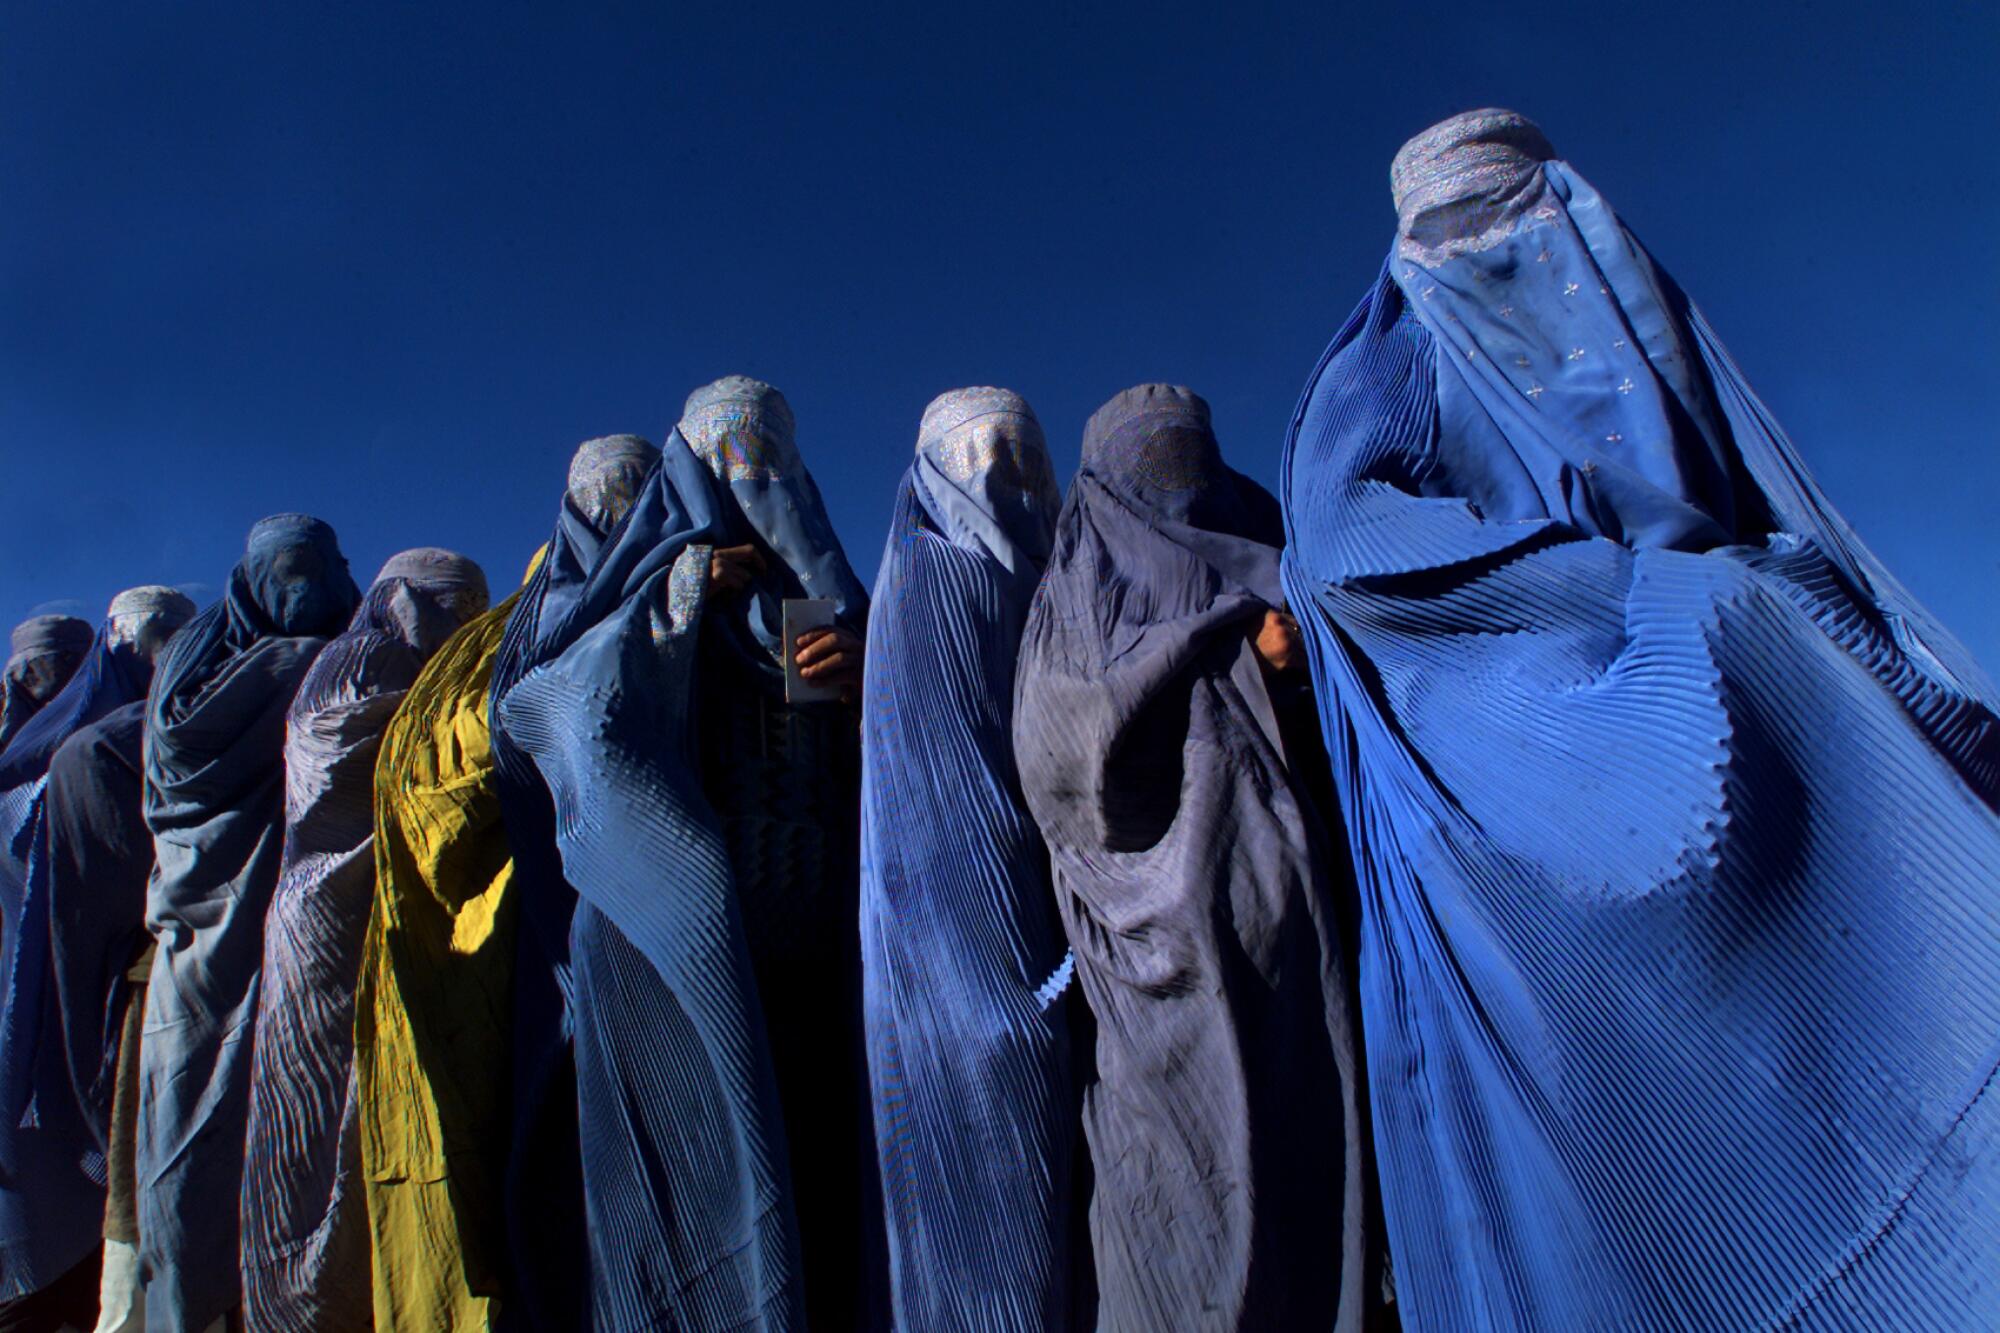 A line of women in full burqas